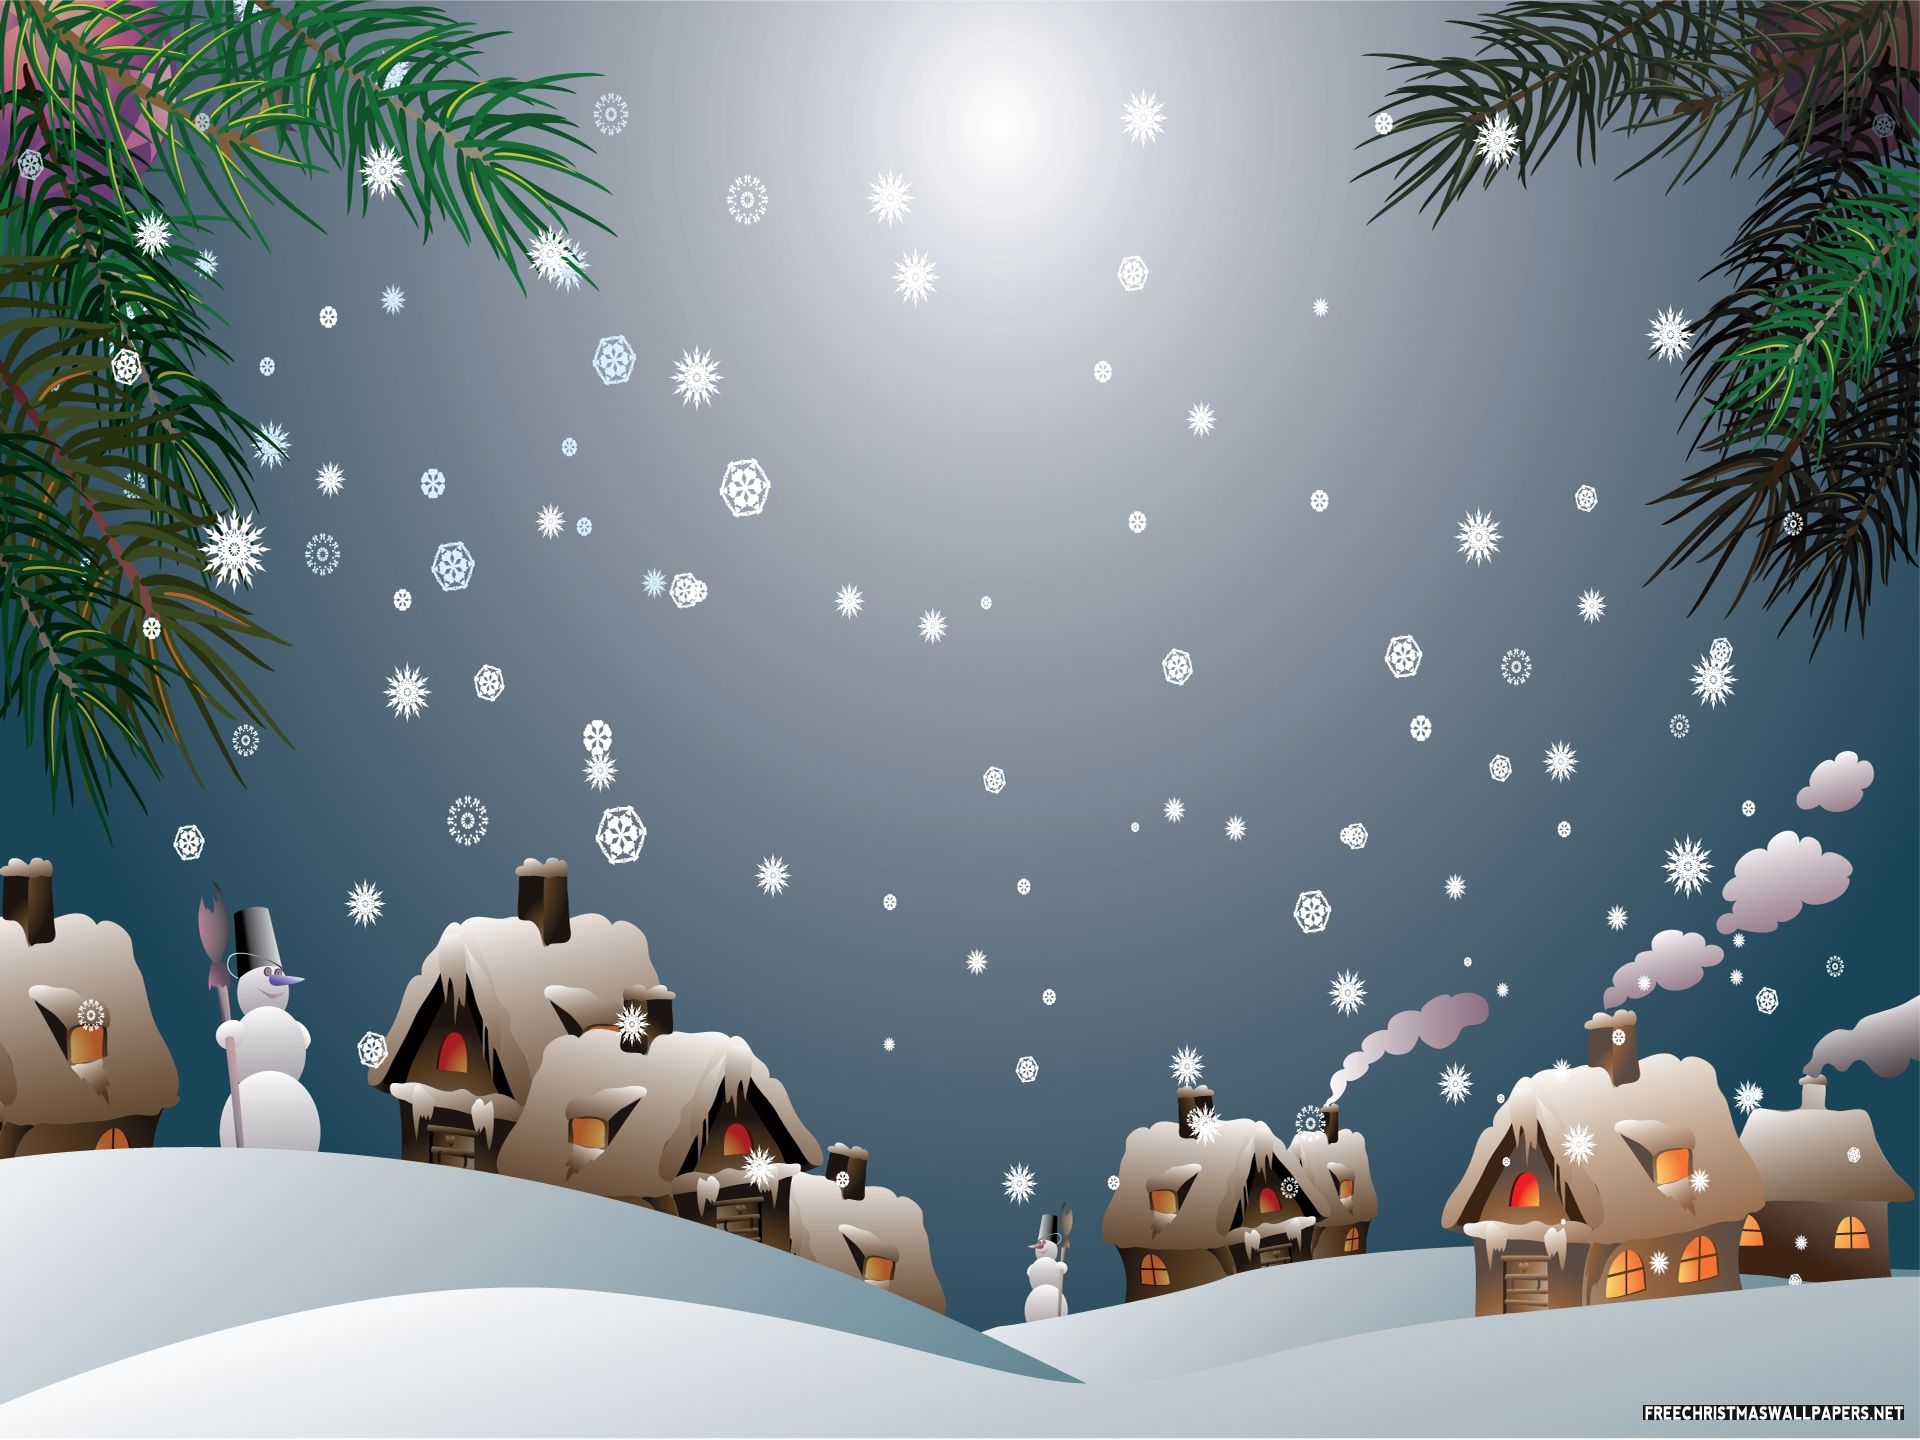 Snowy Christmas Village. Christmas wallpaper free, Christmas village, Christmas desktop